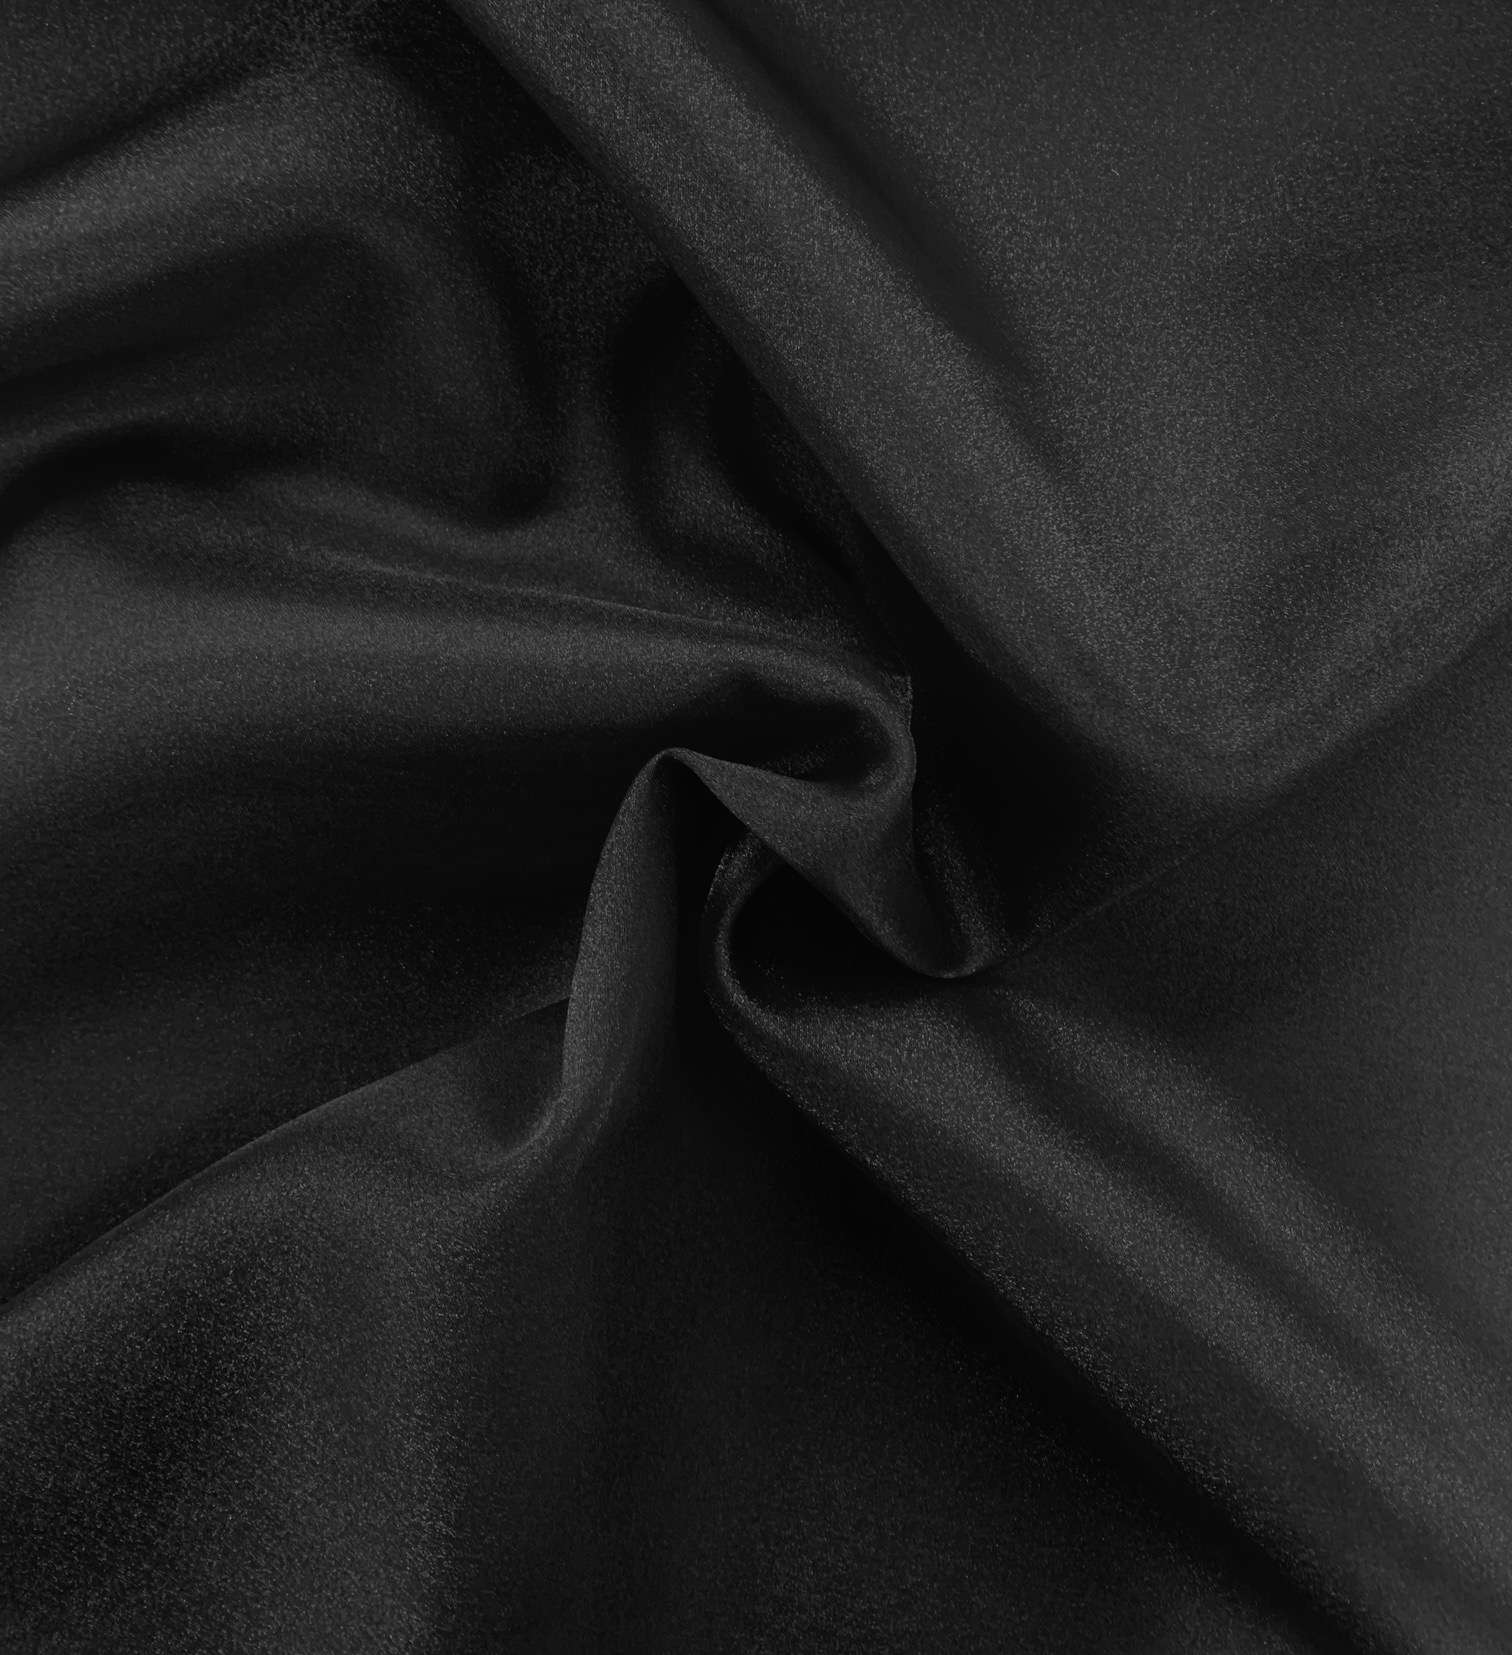 45" Black Organza Fabric 100% Nylon Per Yard Made In Japan